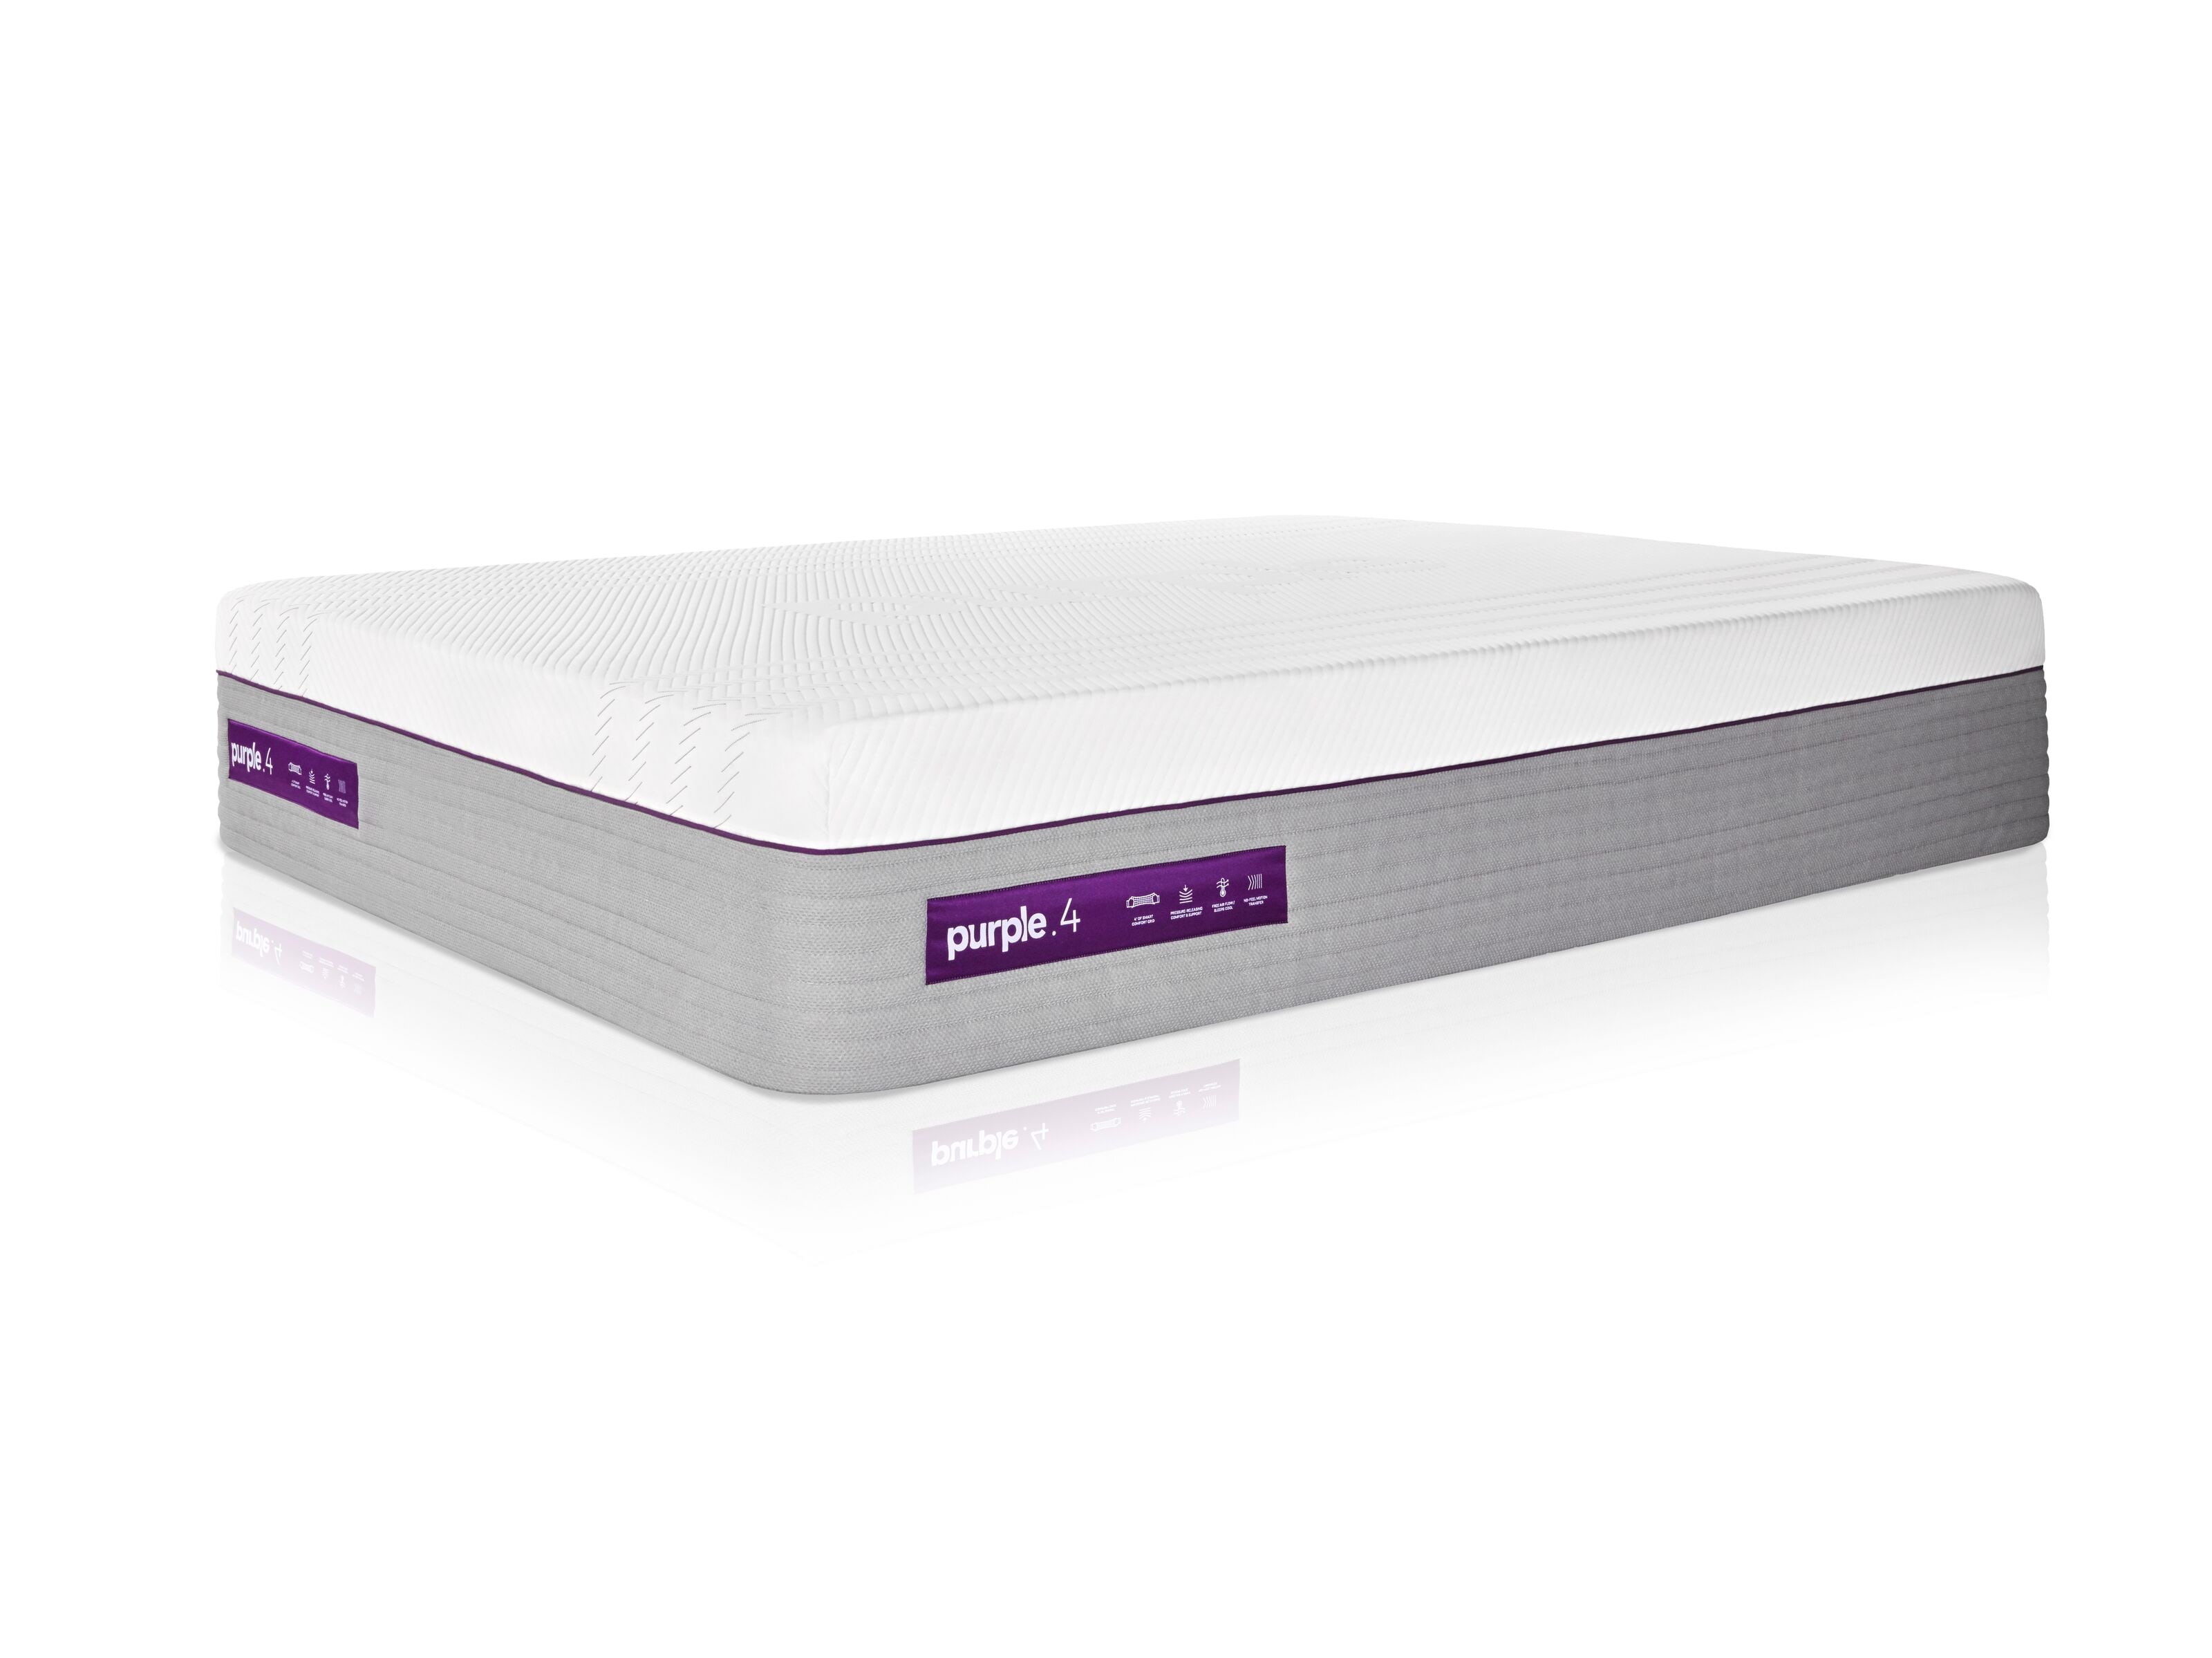 price of a purple queen size mattress